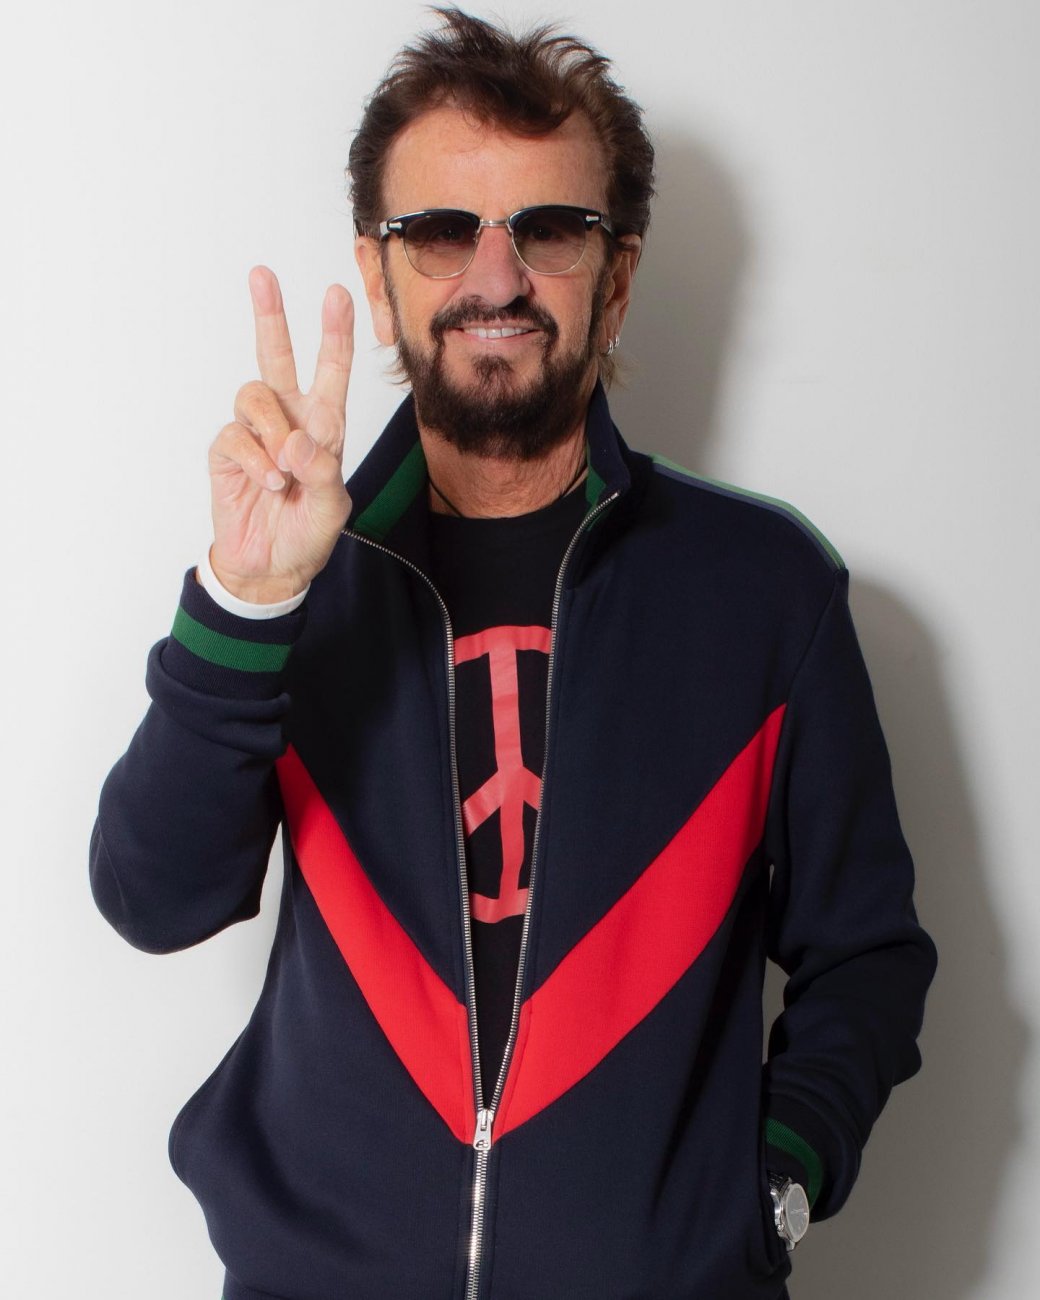 Ringo new tour dates